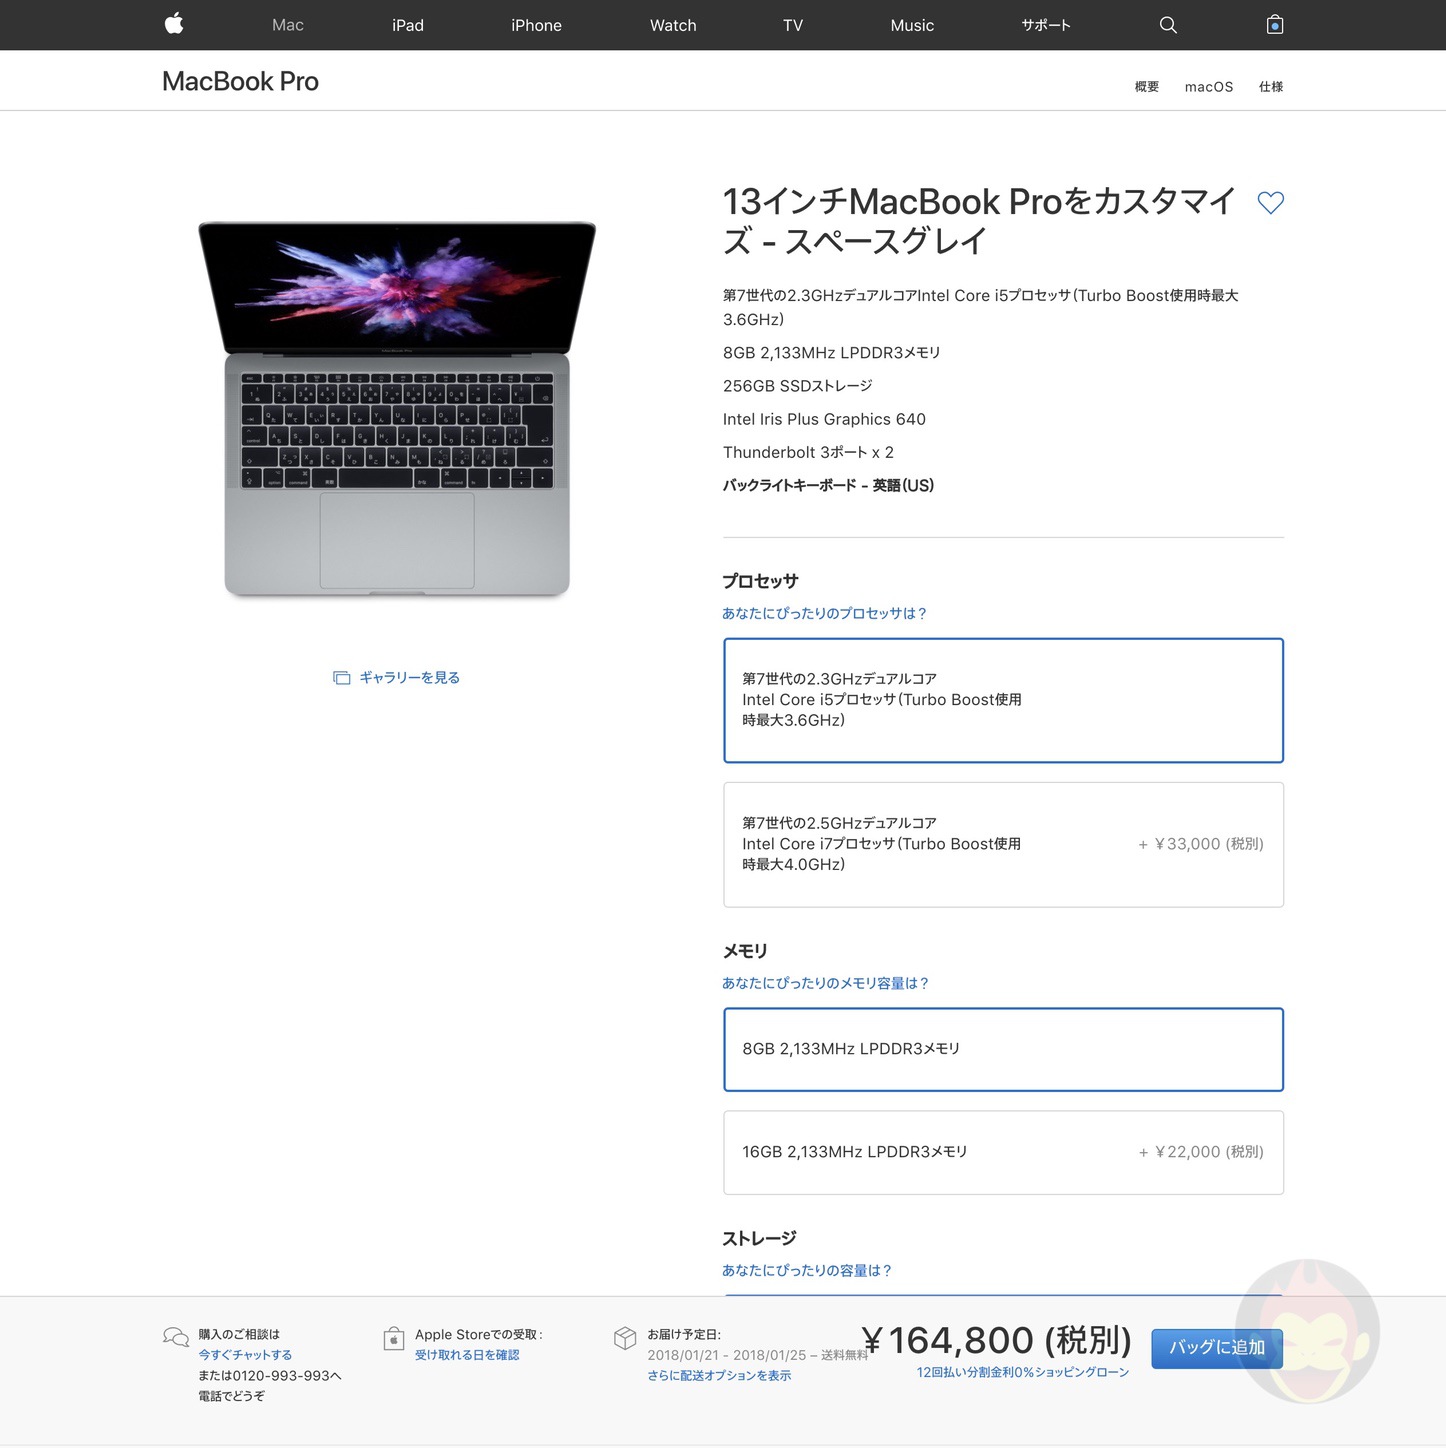 MacBook-Pro-Model-Samples-04.jpg